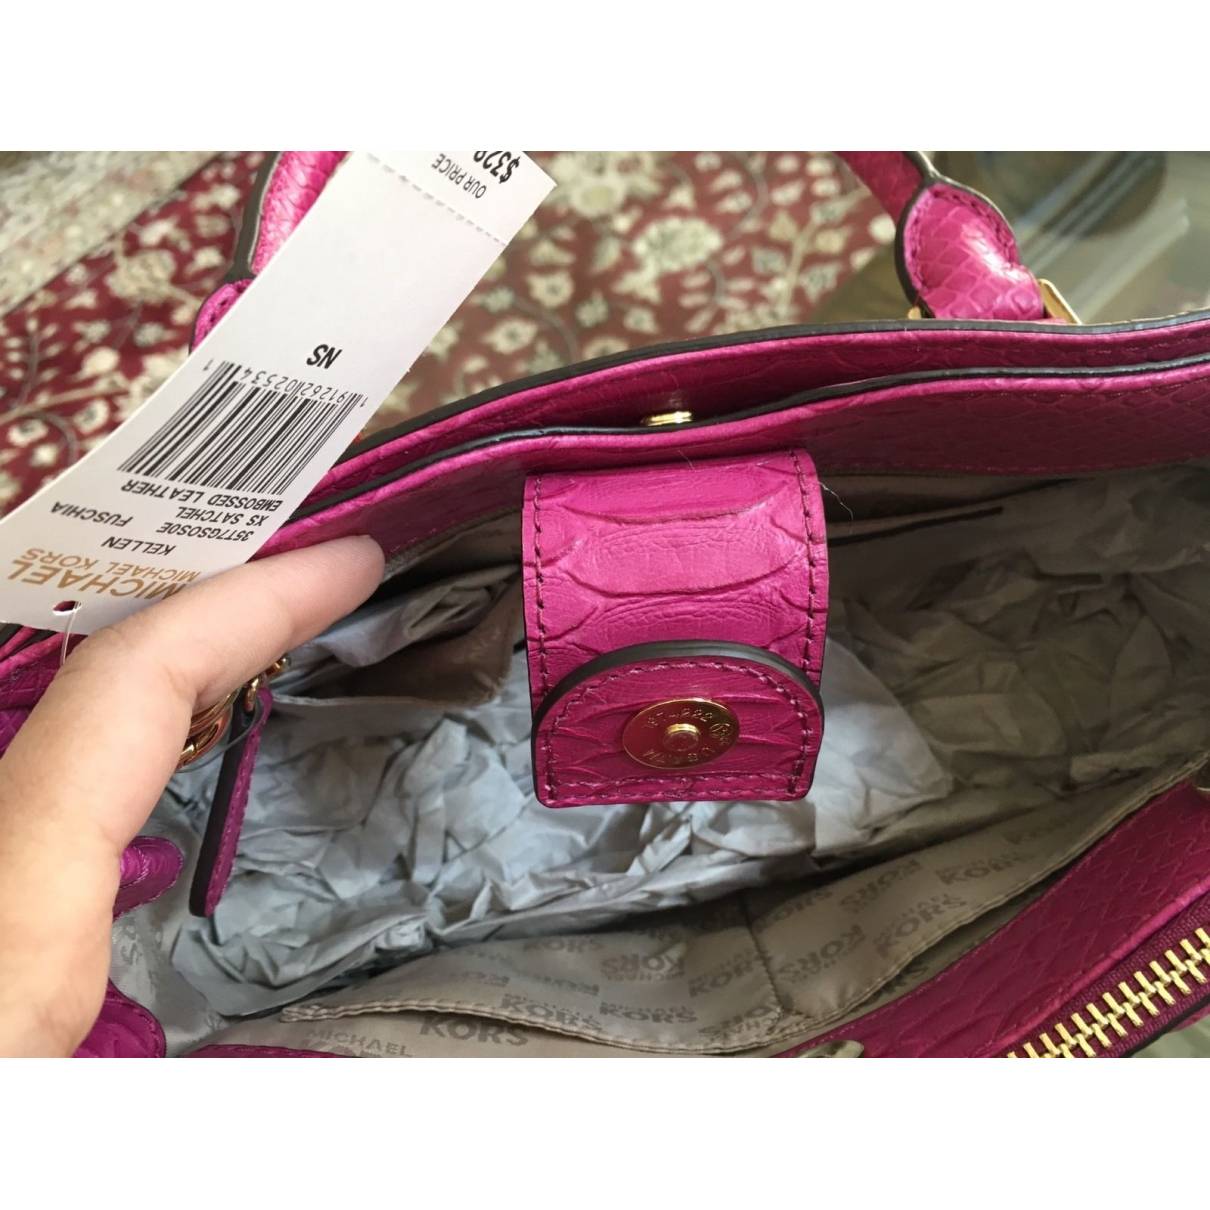 Michael Kors - Authenticated Handbag - Leather Black Plain for Women, Never Worn